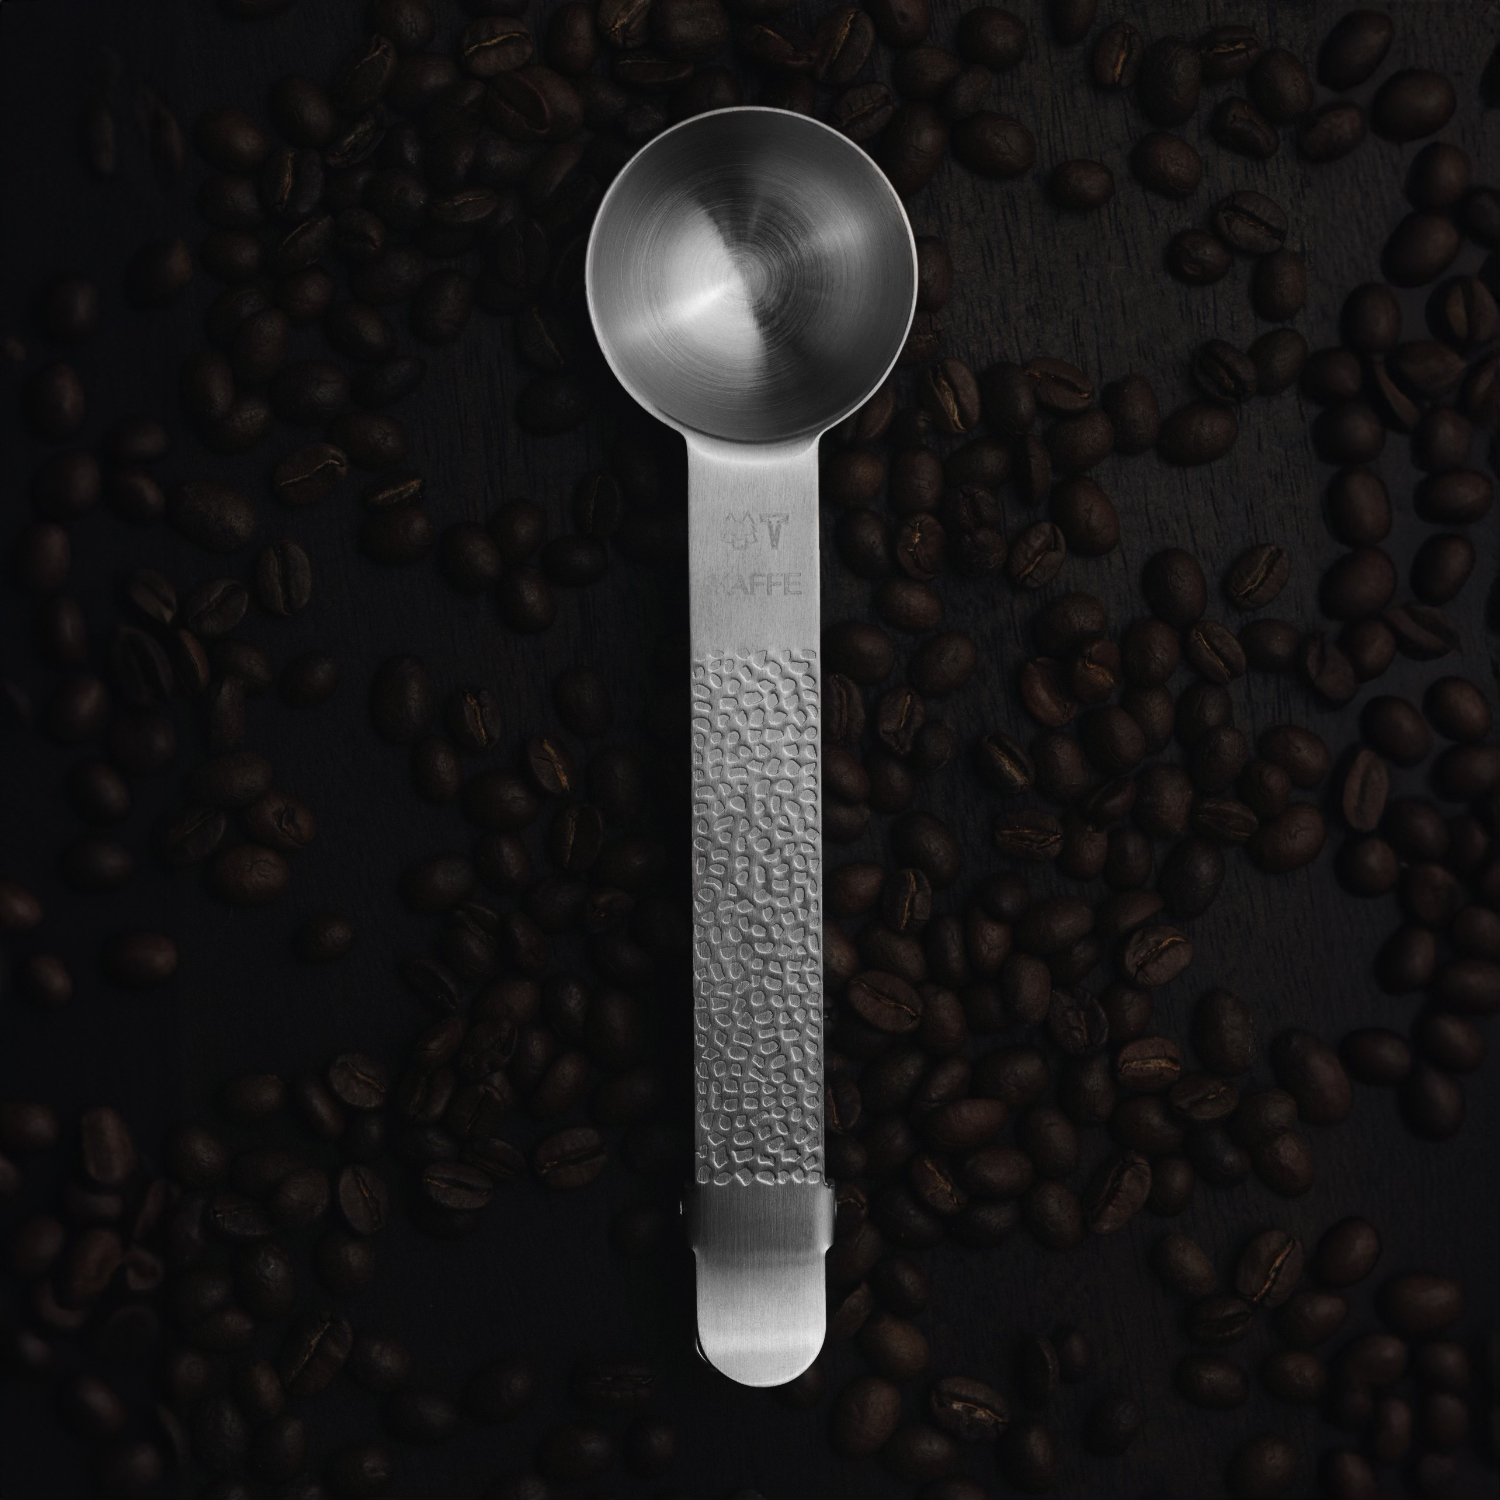 Frost kaffemått